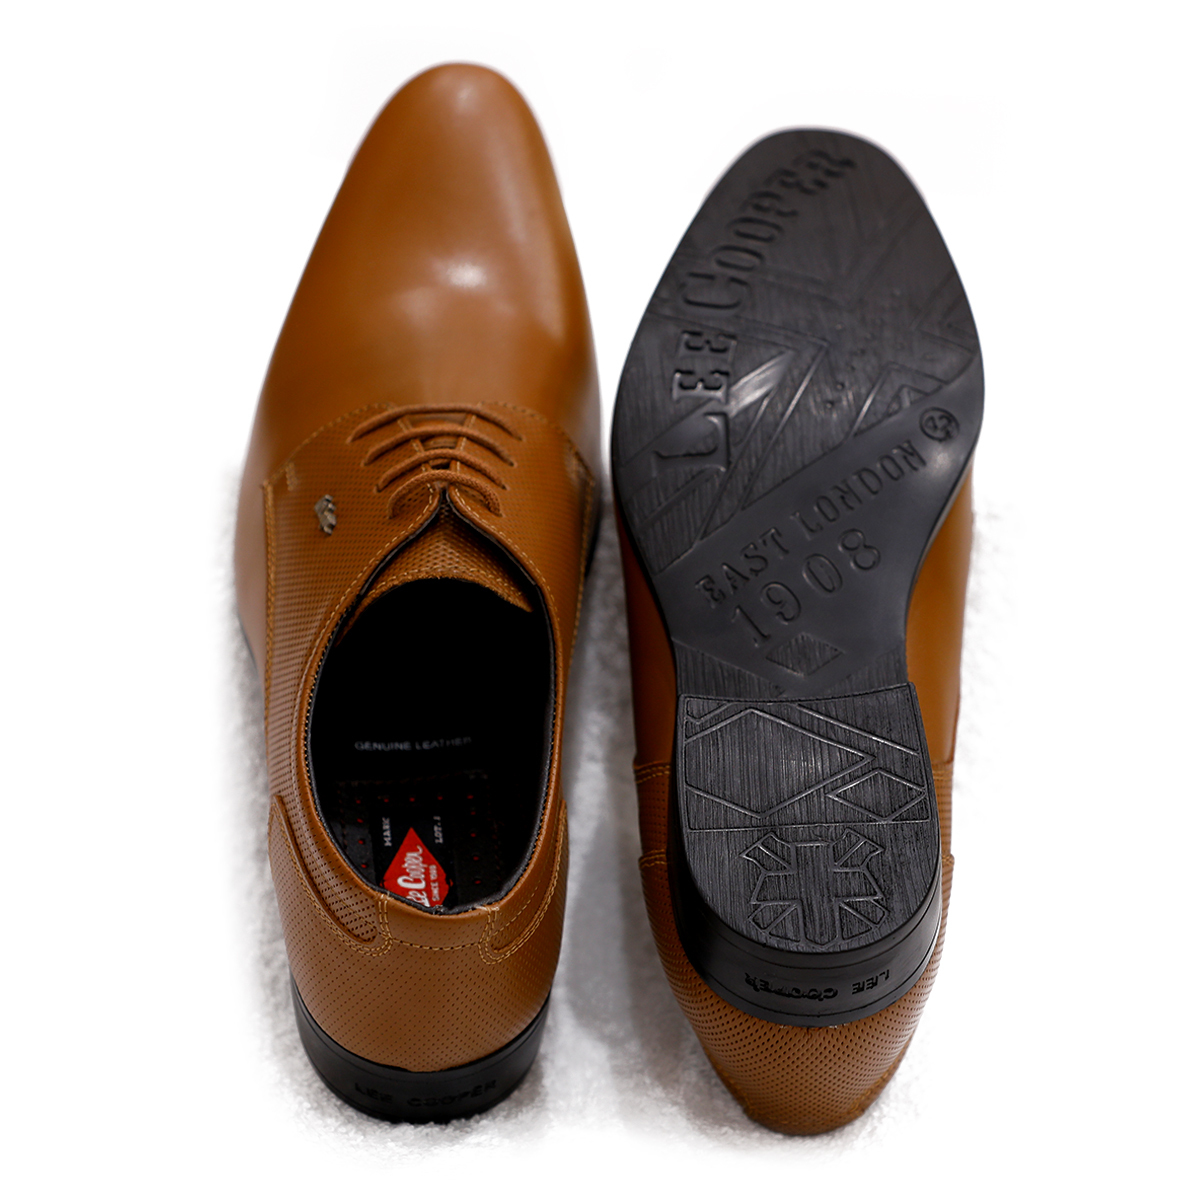 Lee Cooper Mens Formal Shoe LC1679B4